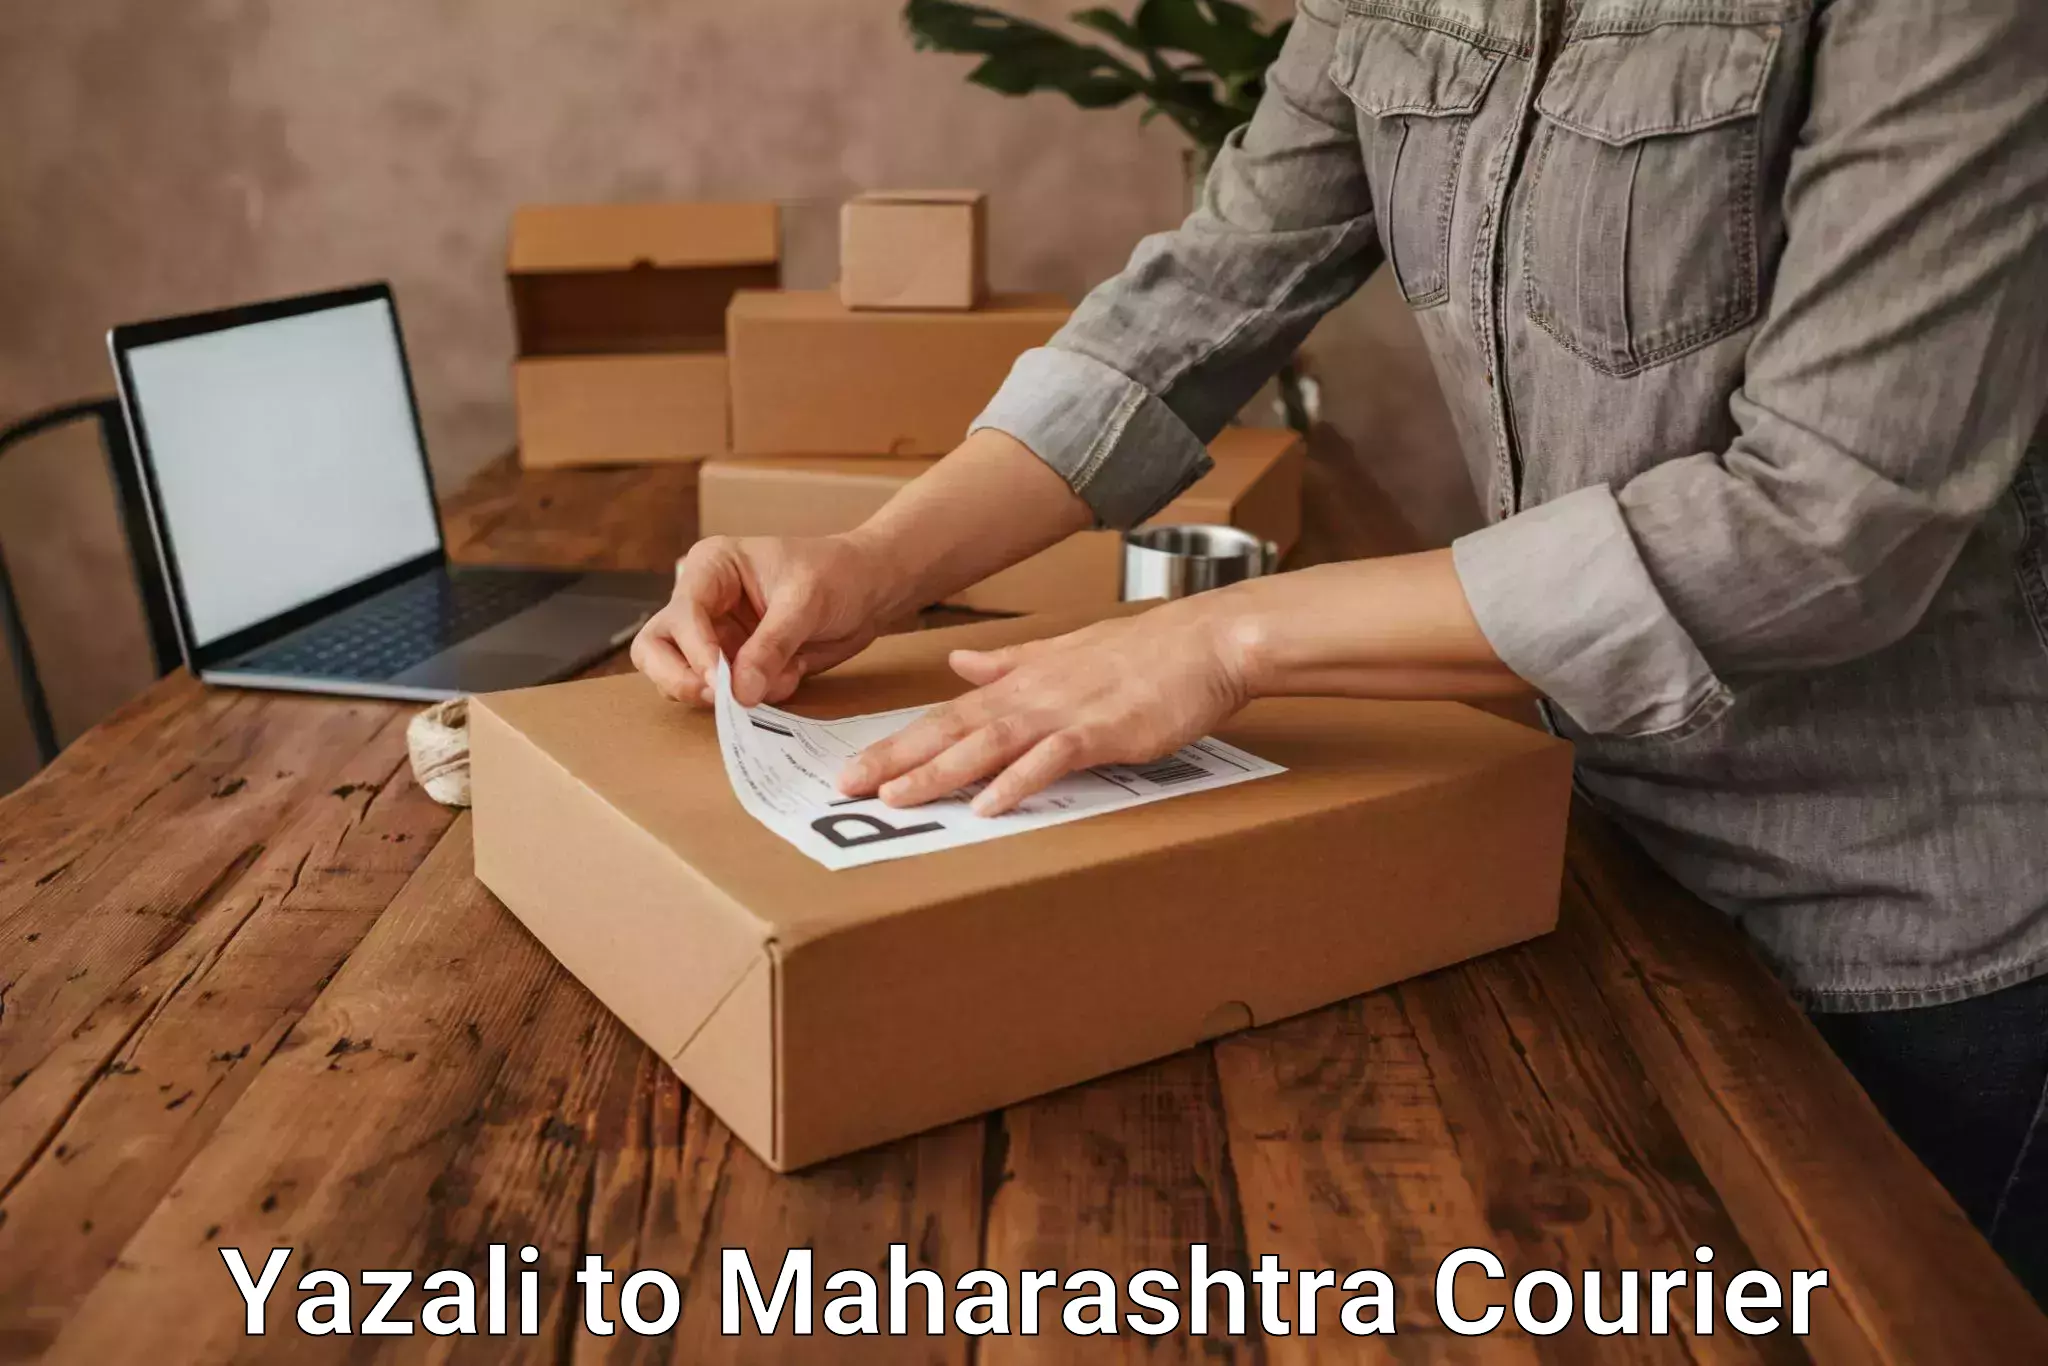 Courier service booking Yazali to Maharashtra